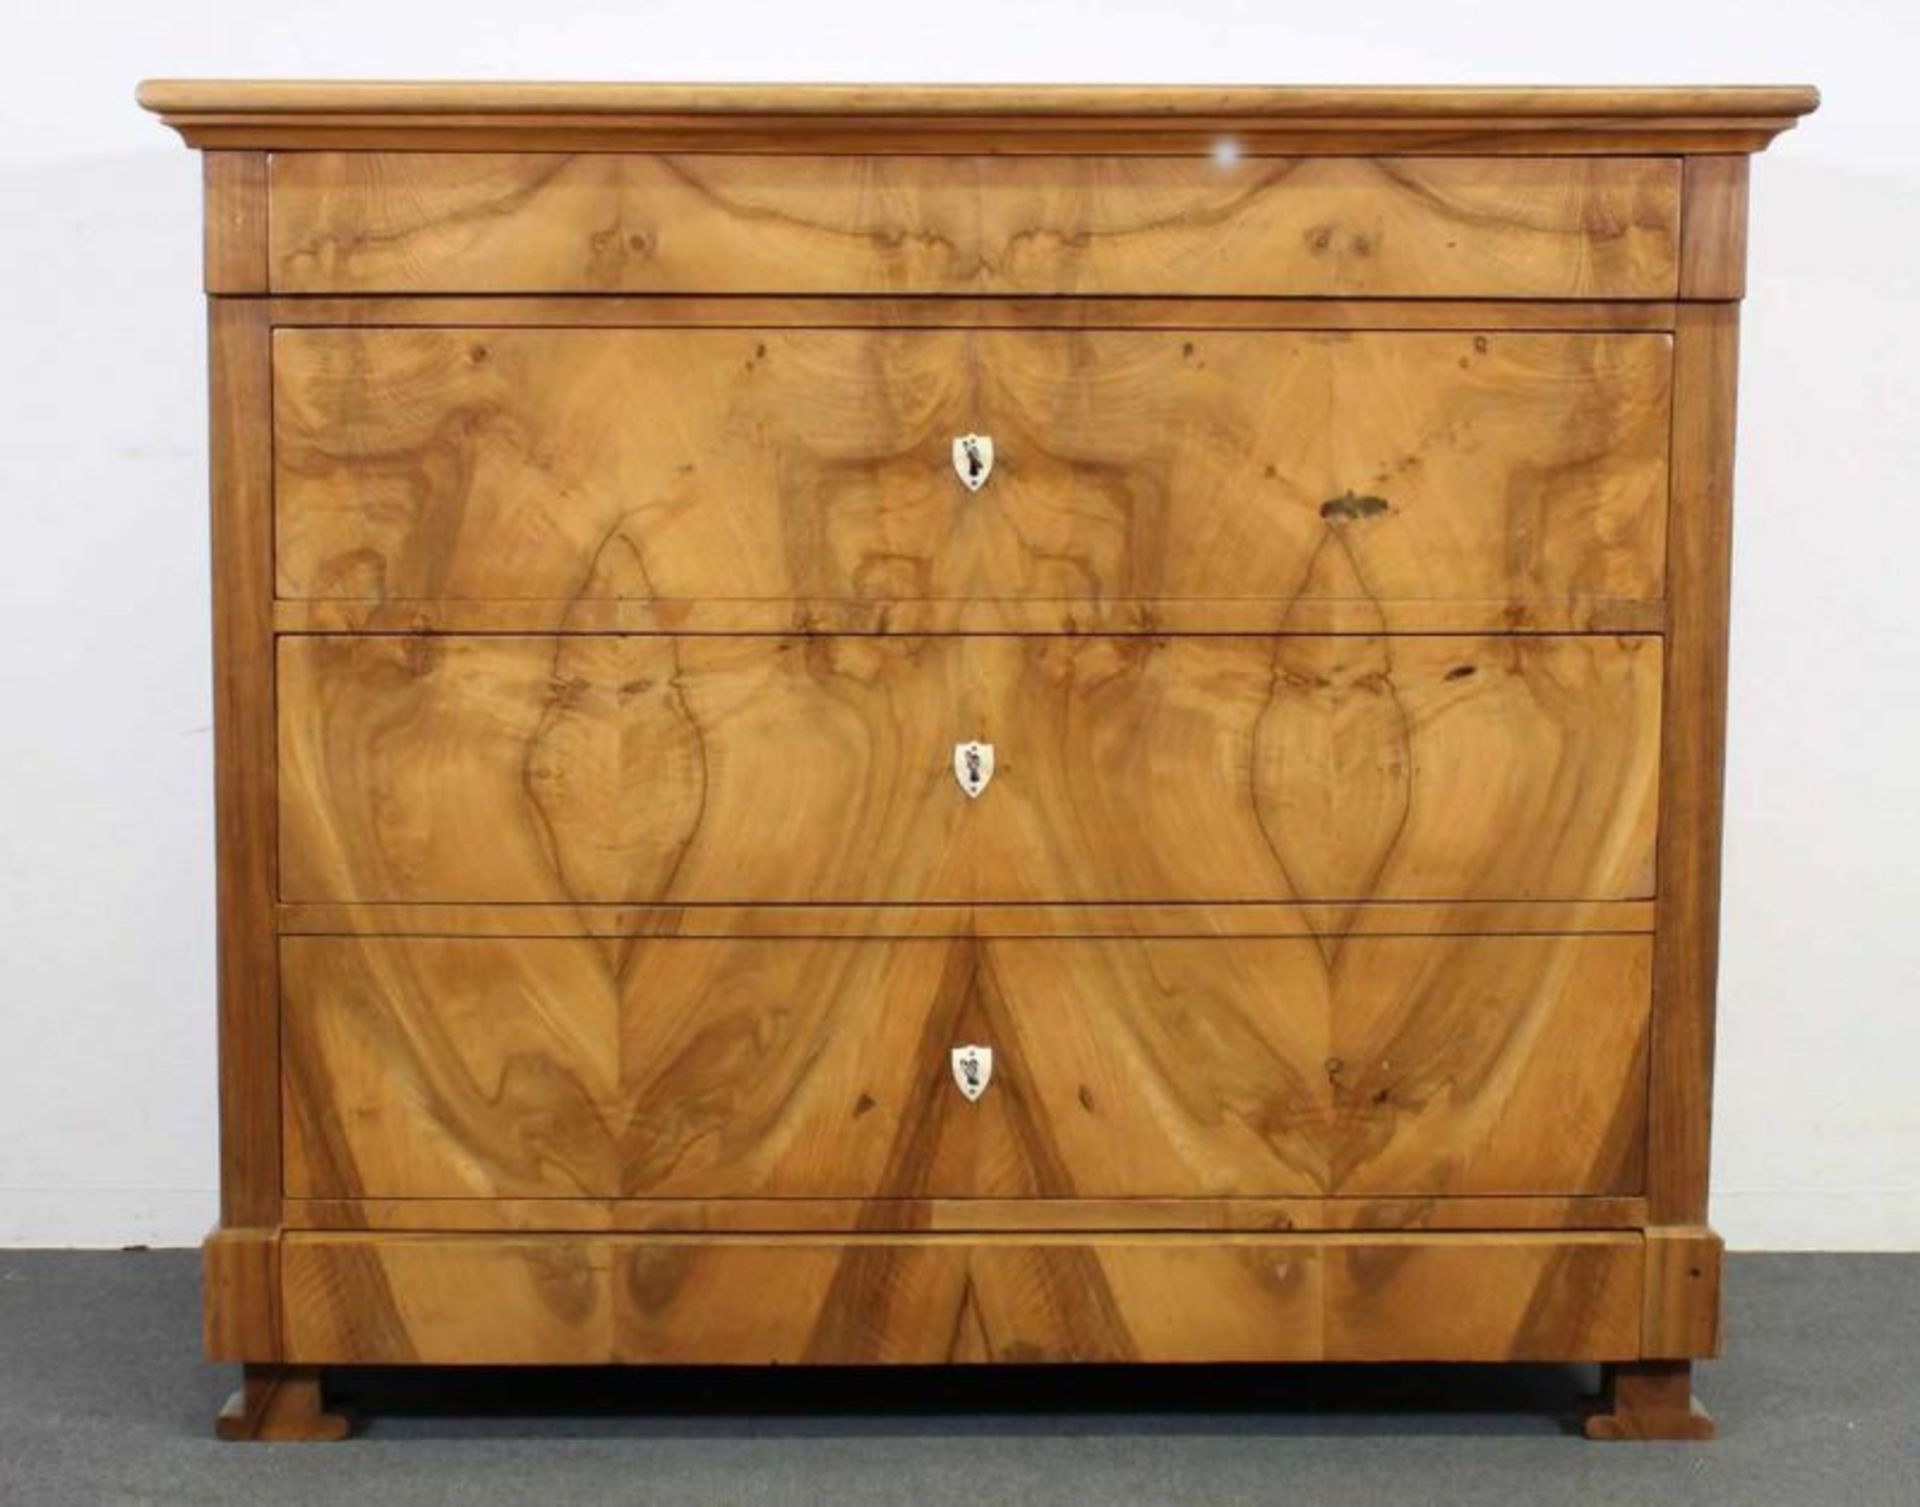 Kommode, Biedermeier, um 1840, Nuss-/Nussmaserholz, fünf Schübe, 100 x 117 x 60 cm 20.00 % buyer's